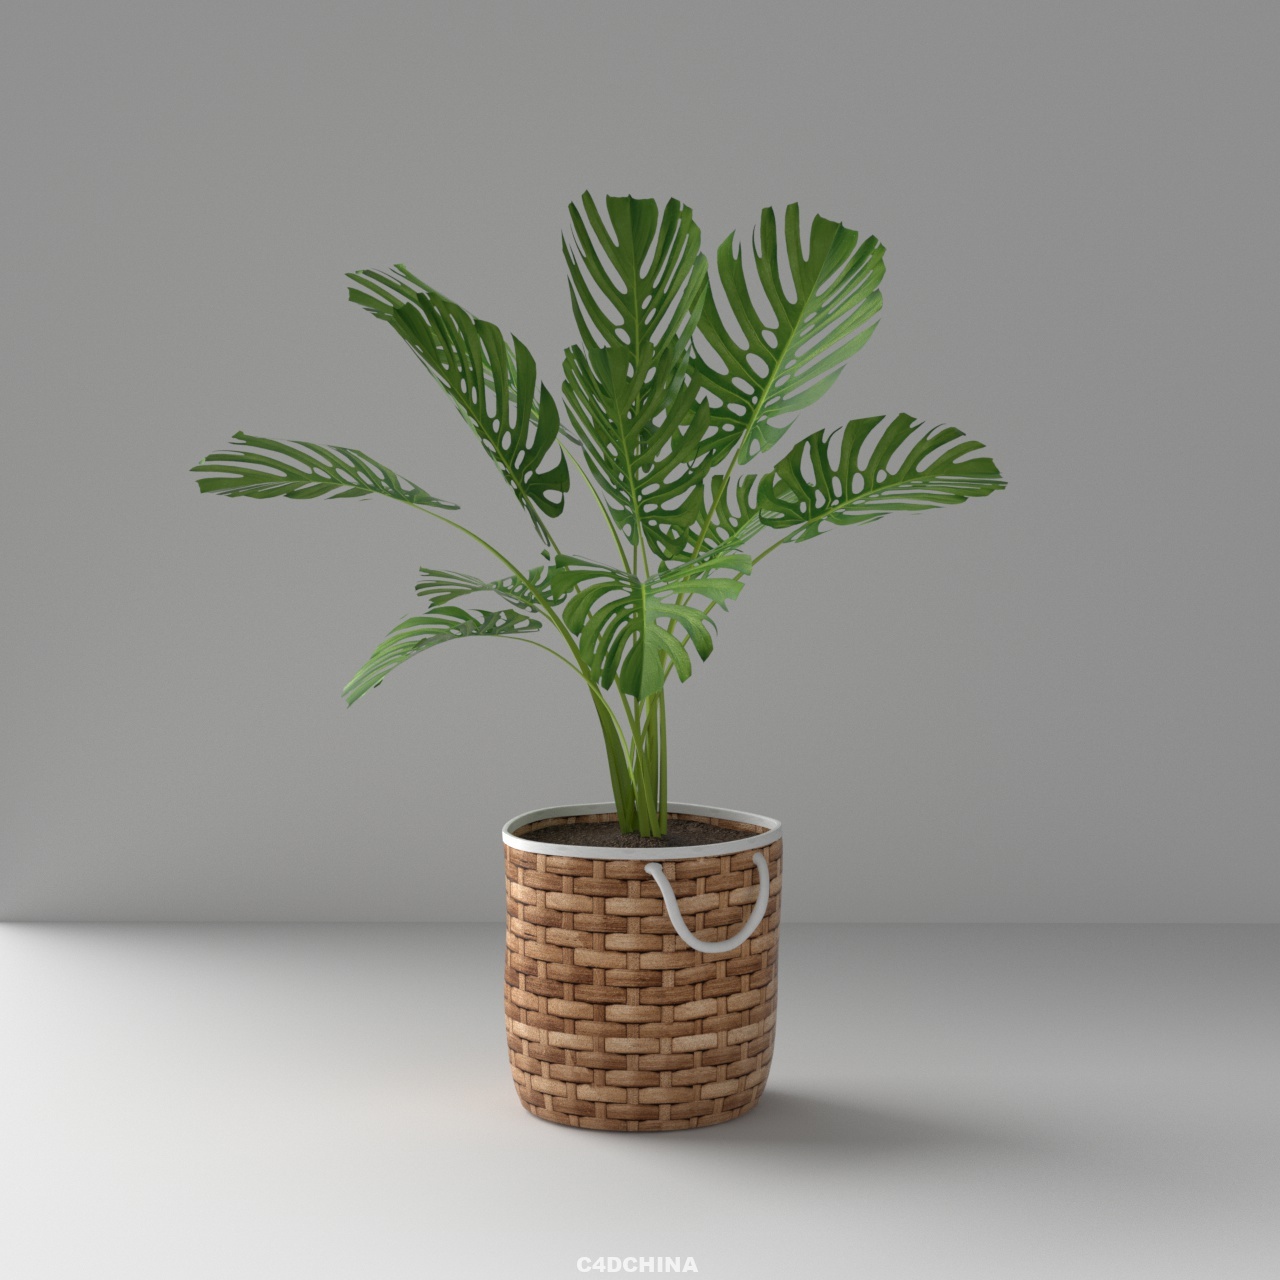 C4D obj fbx 室内植物盆栽模型oc渲染带材质贴图3d花卉装饰盆栽